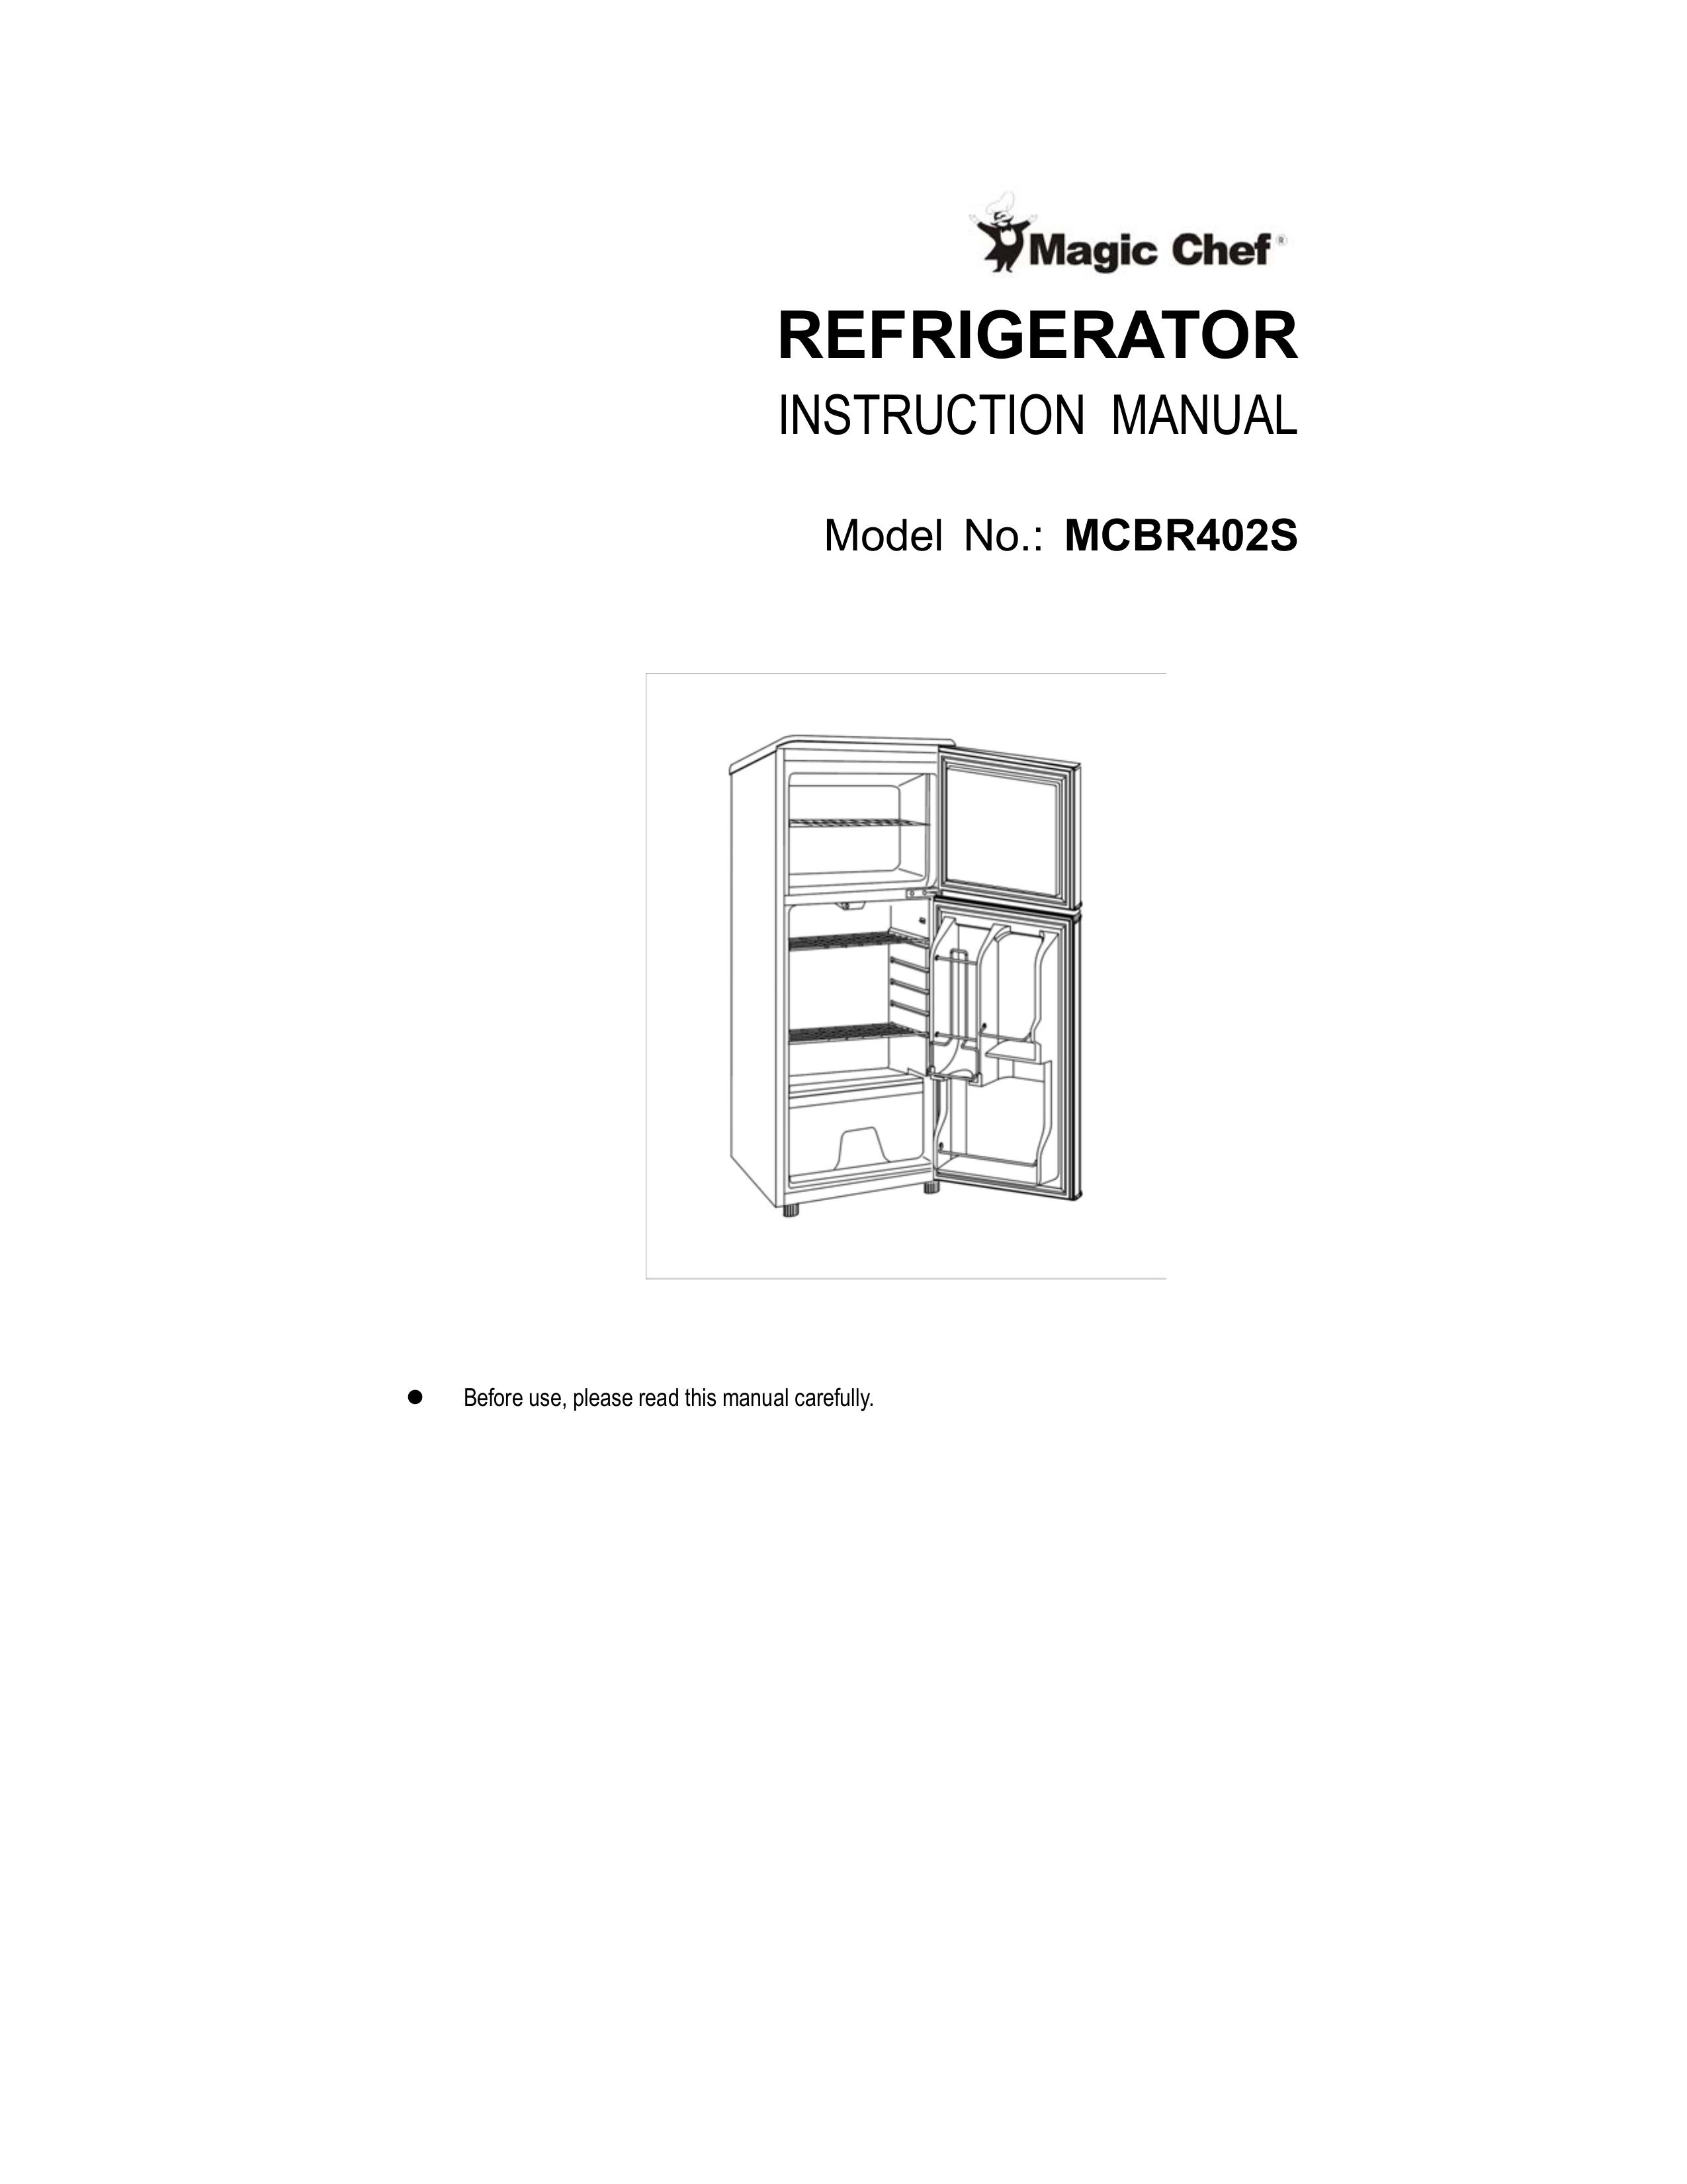 Magic Chef MCBR402S Refrigerator User Manual